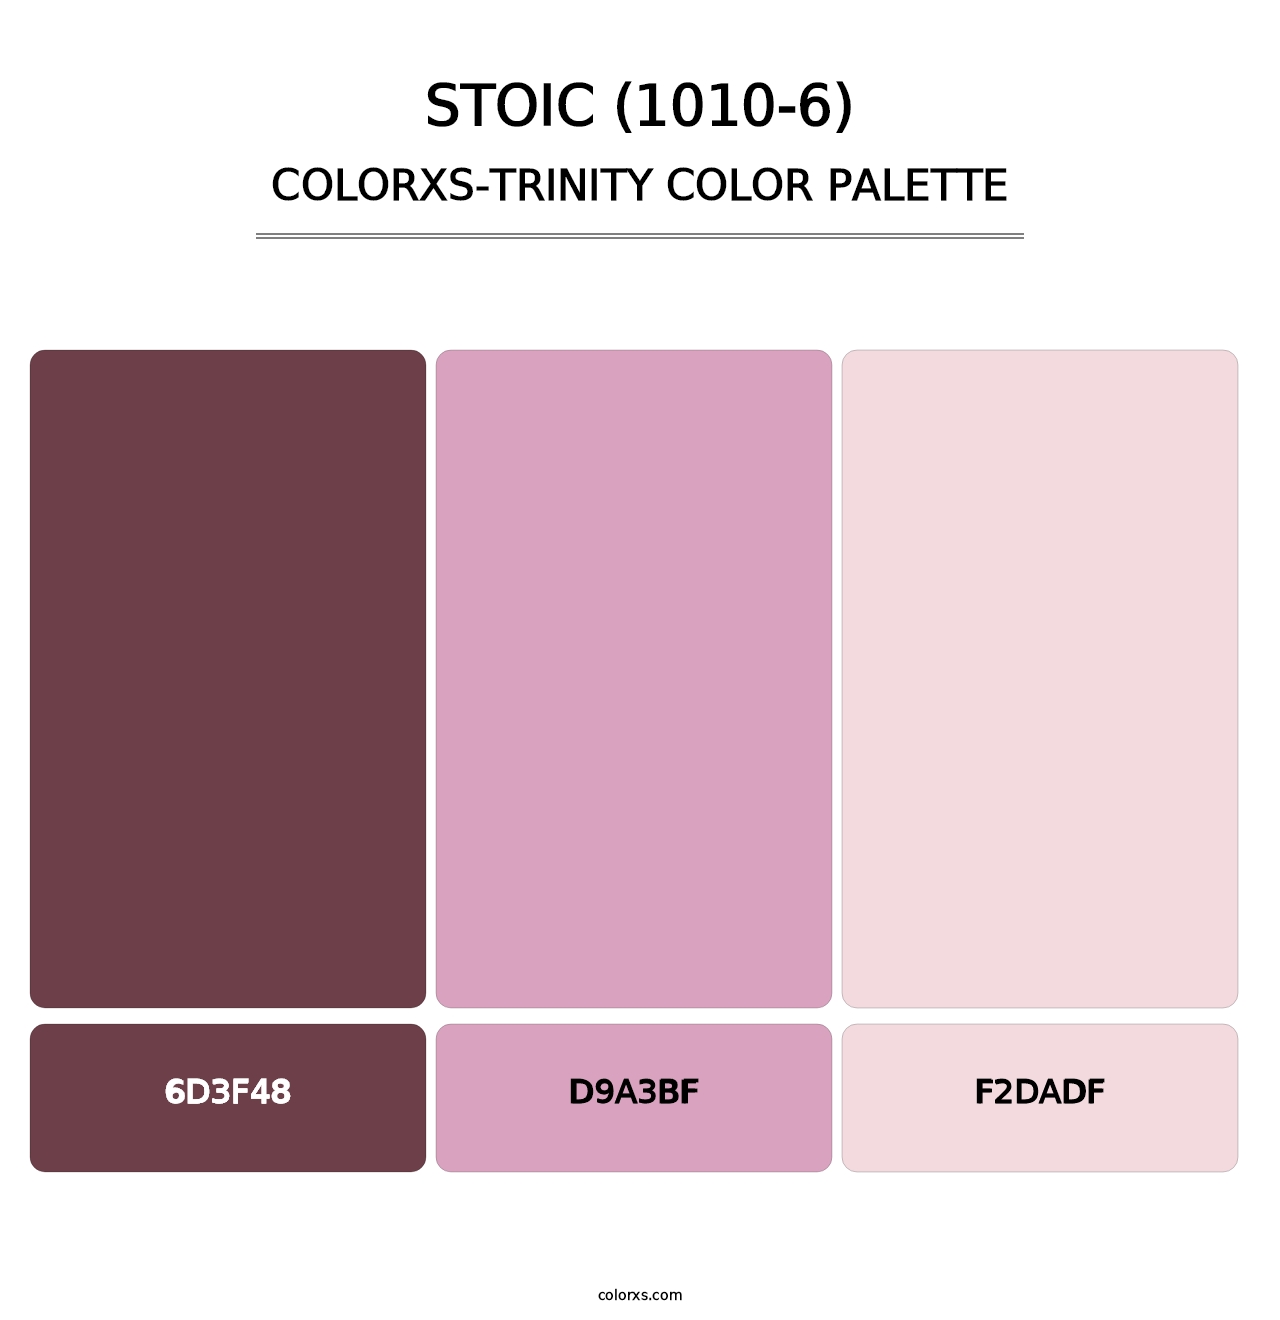 Stoic (1010-6) - Colorxs Trinity Palette